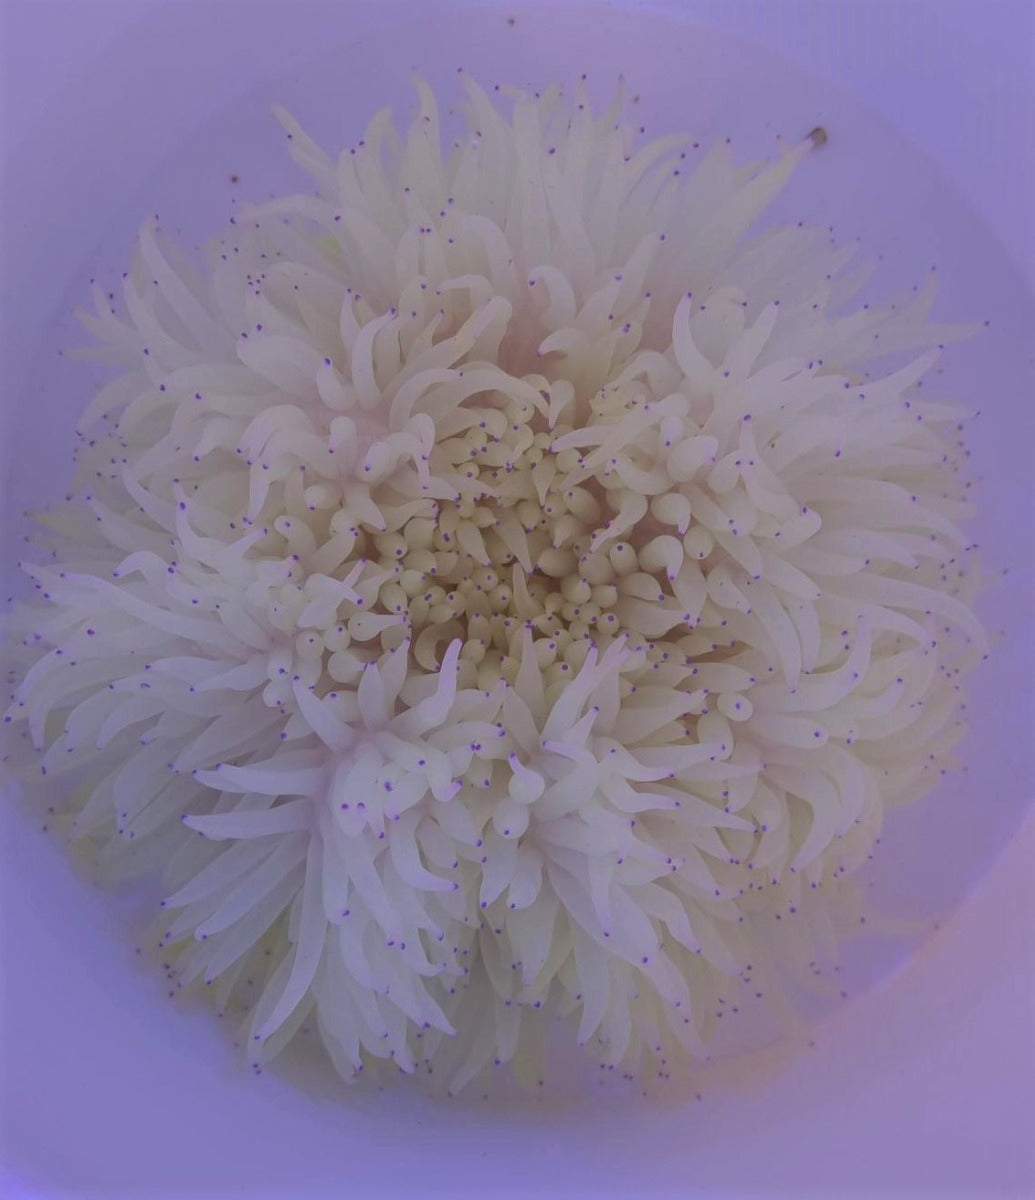 Heteractis crispa (Wit) - Sebae anemone (Wit)